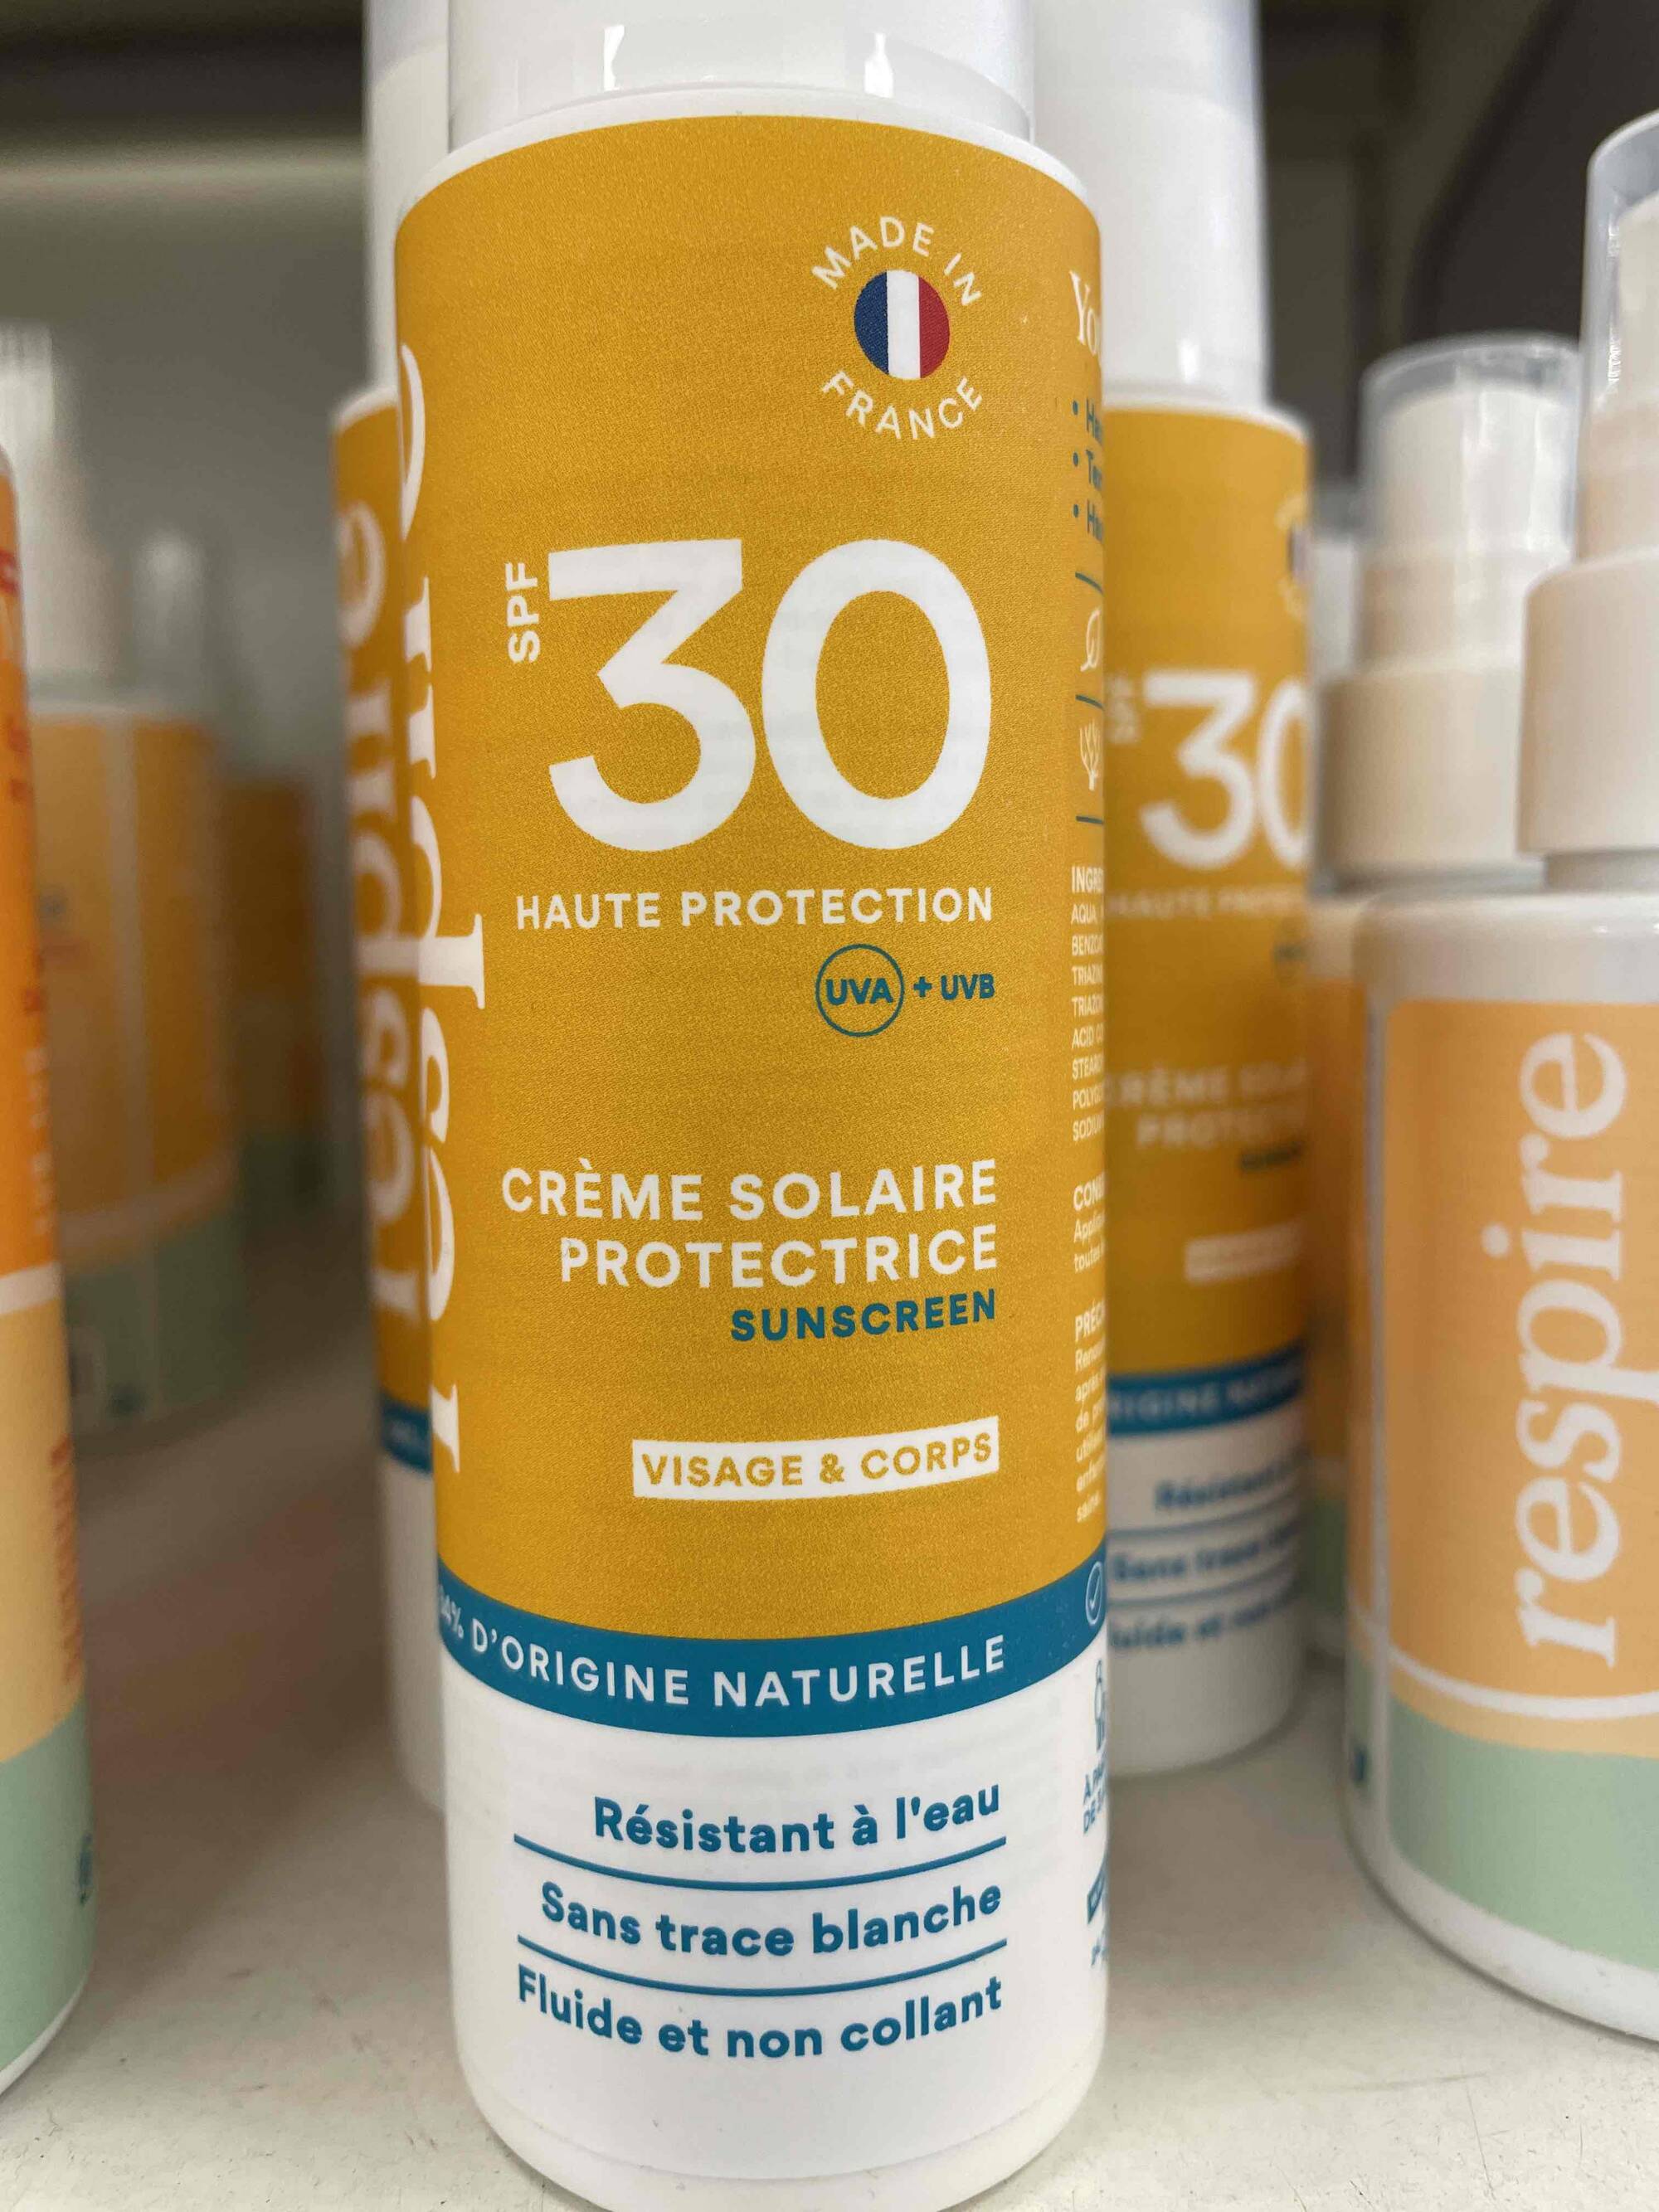 RESPIRE - Crème solaire protectrice SPF 30